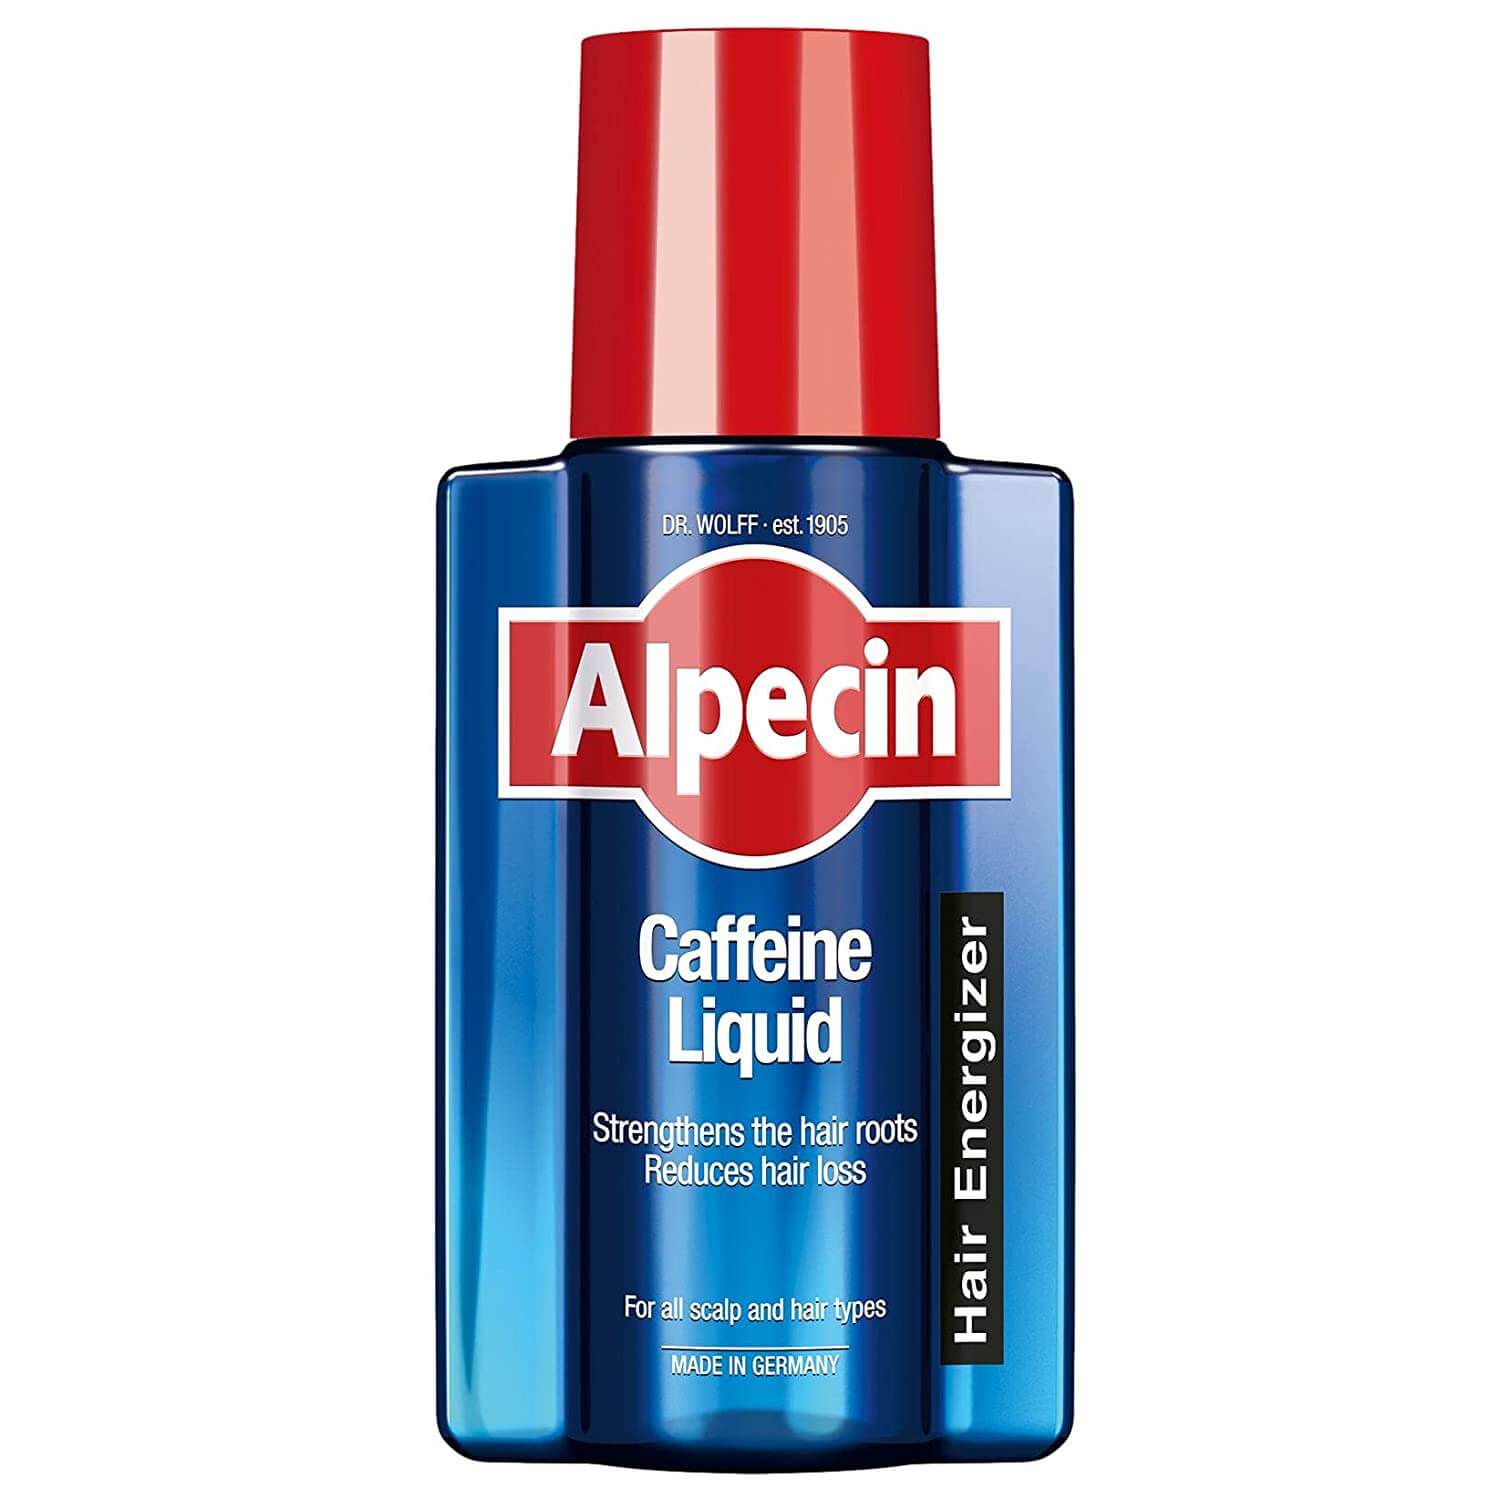 Alpecin caffeine liquid